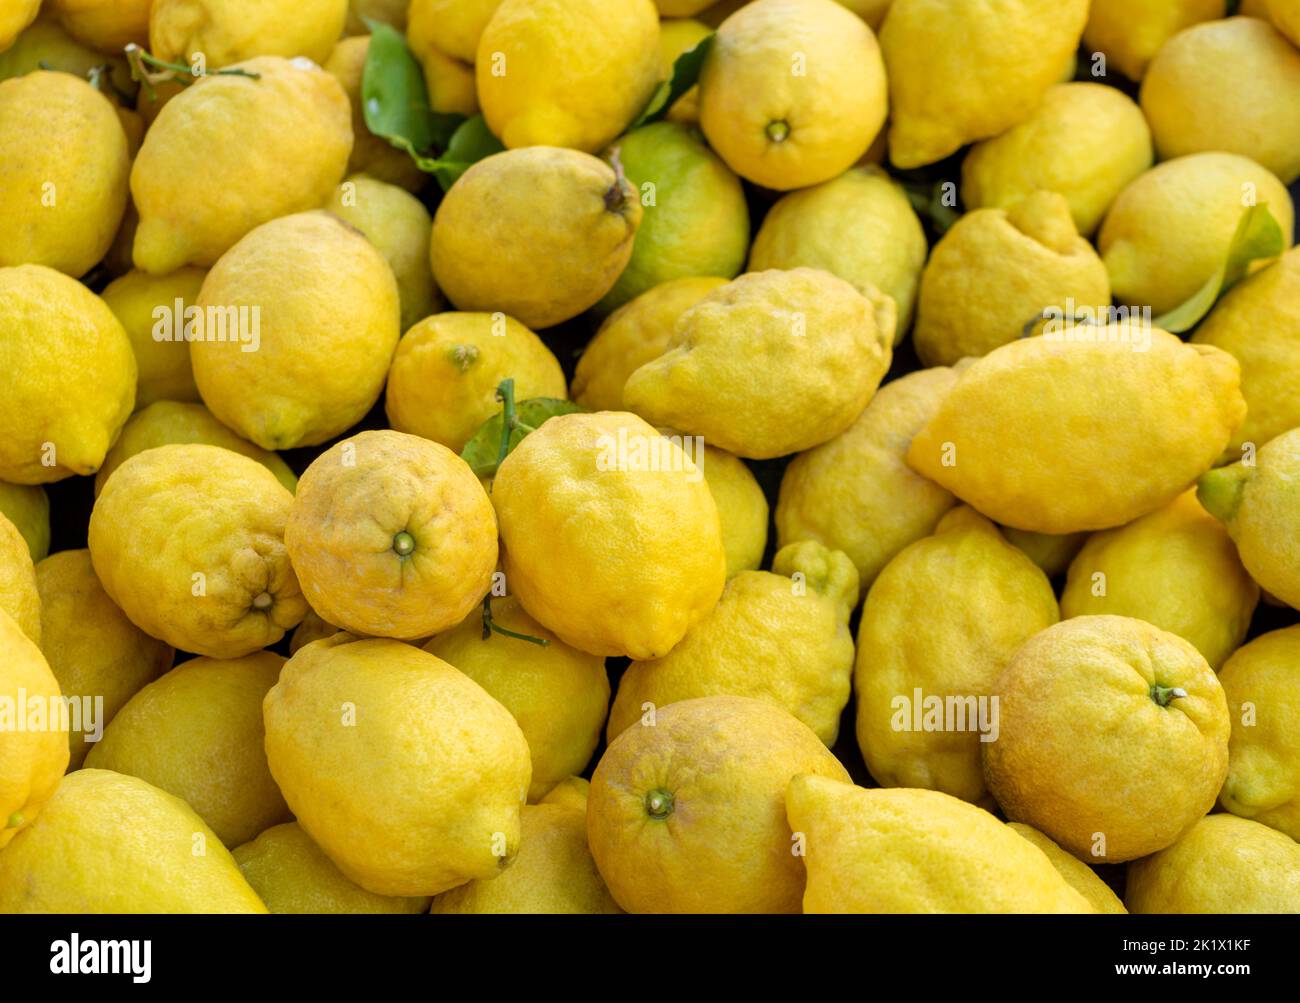 Full frame shots showing lots of ripe organic yellow lemons Stock Photo